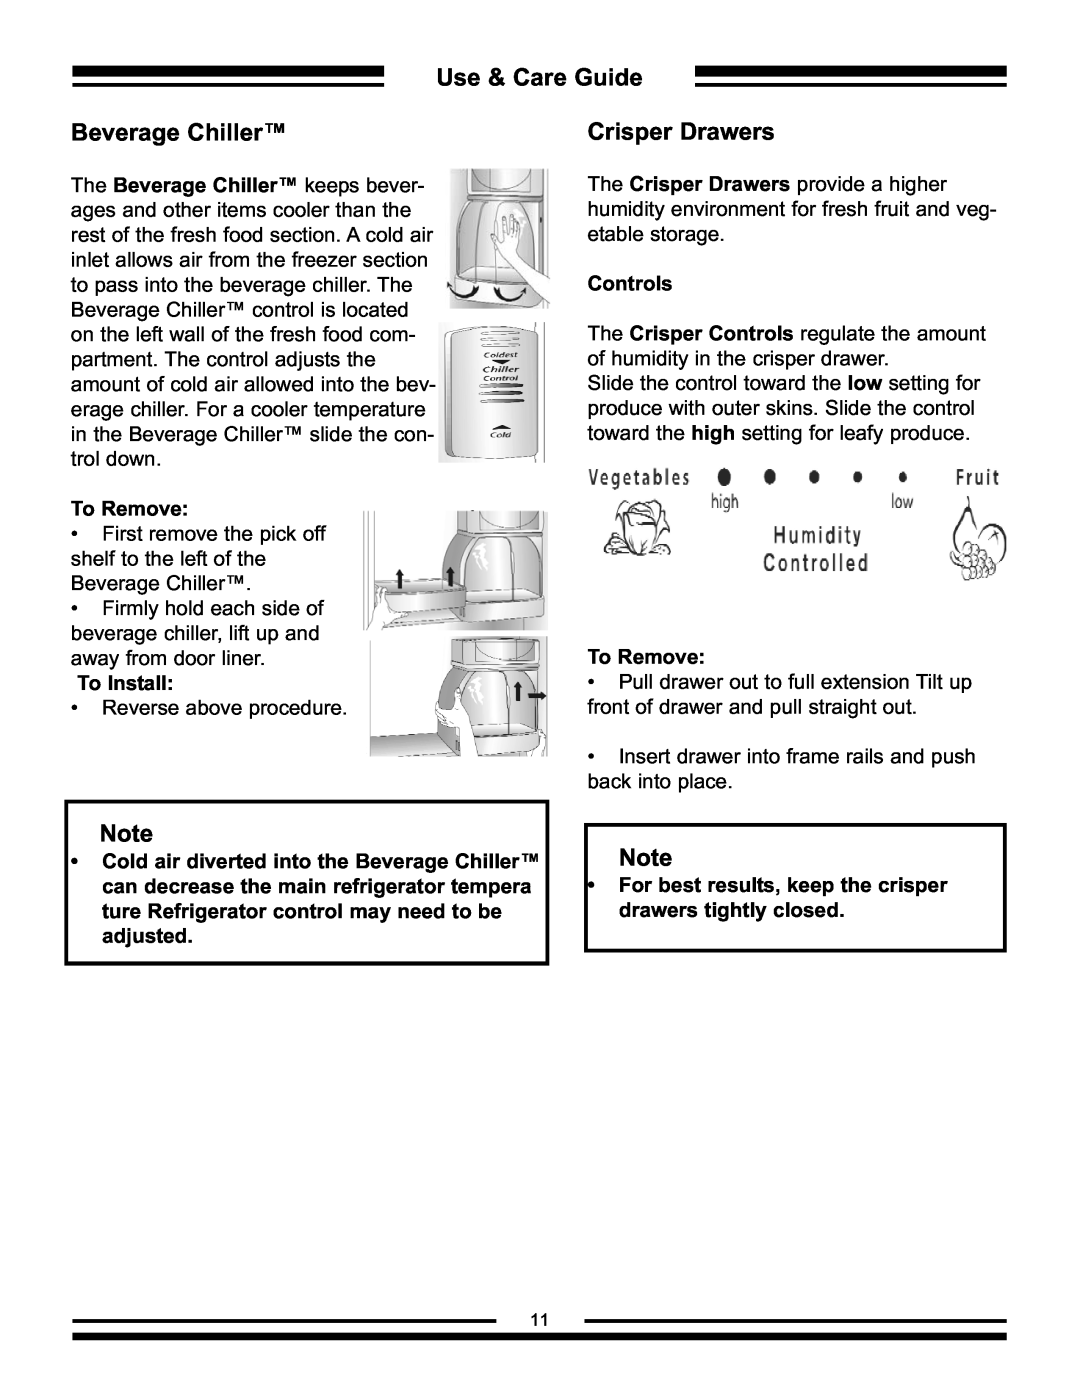 Aga Ranges AFHR-36 manual Beverage Chiller, Crisper Drawers, Use & Care Guide 